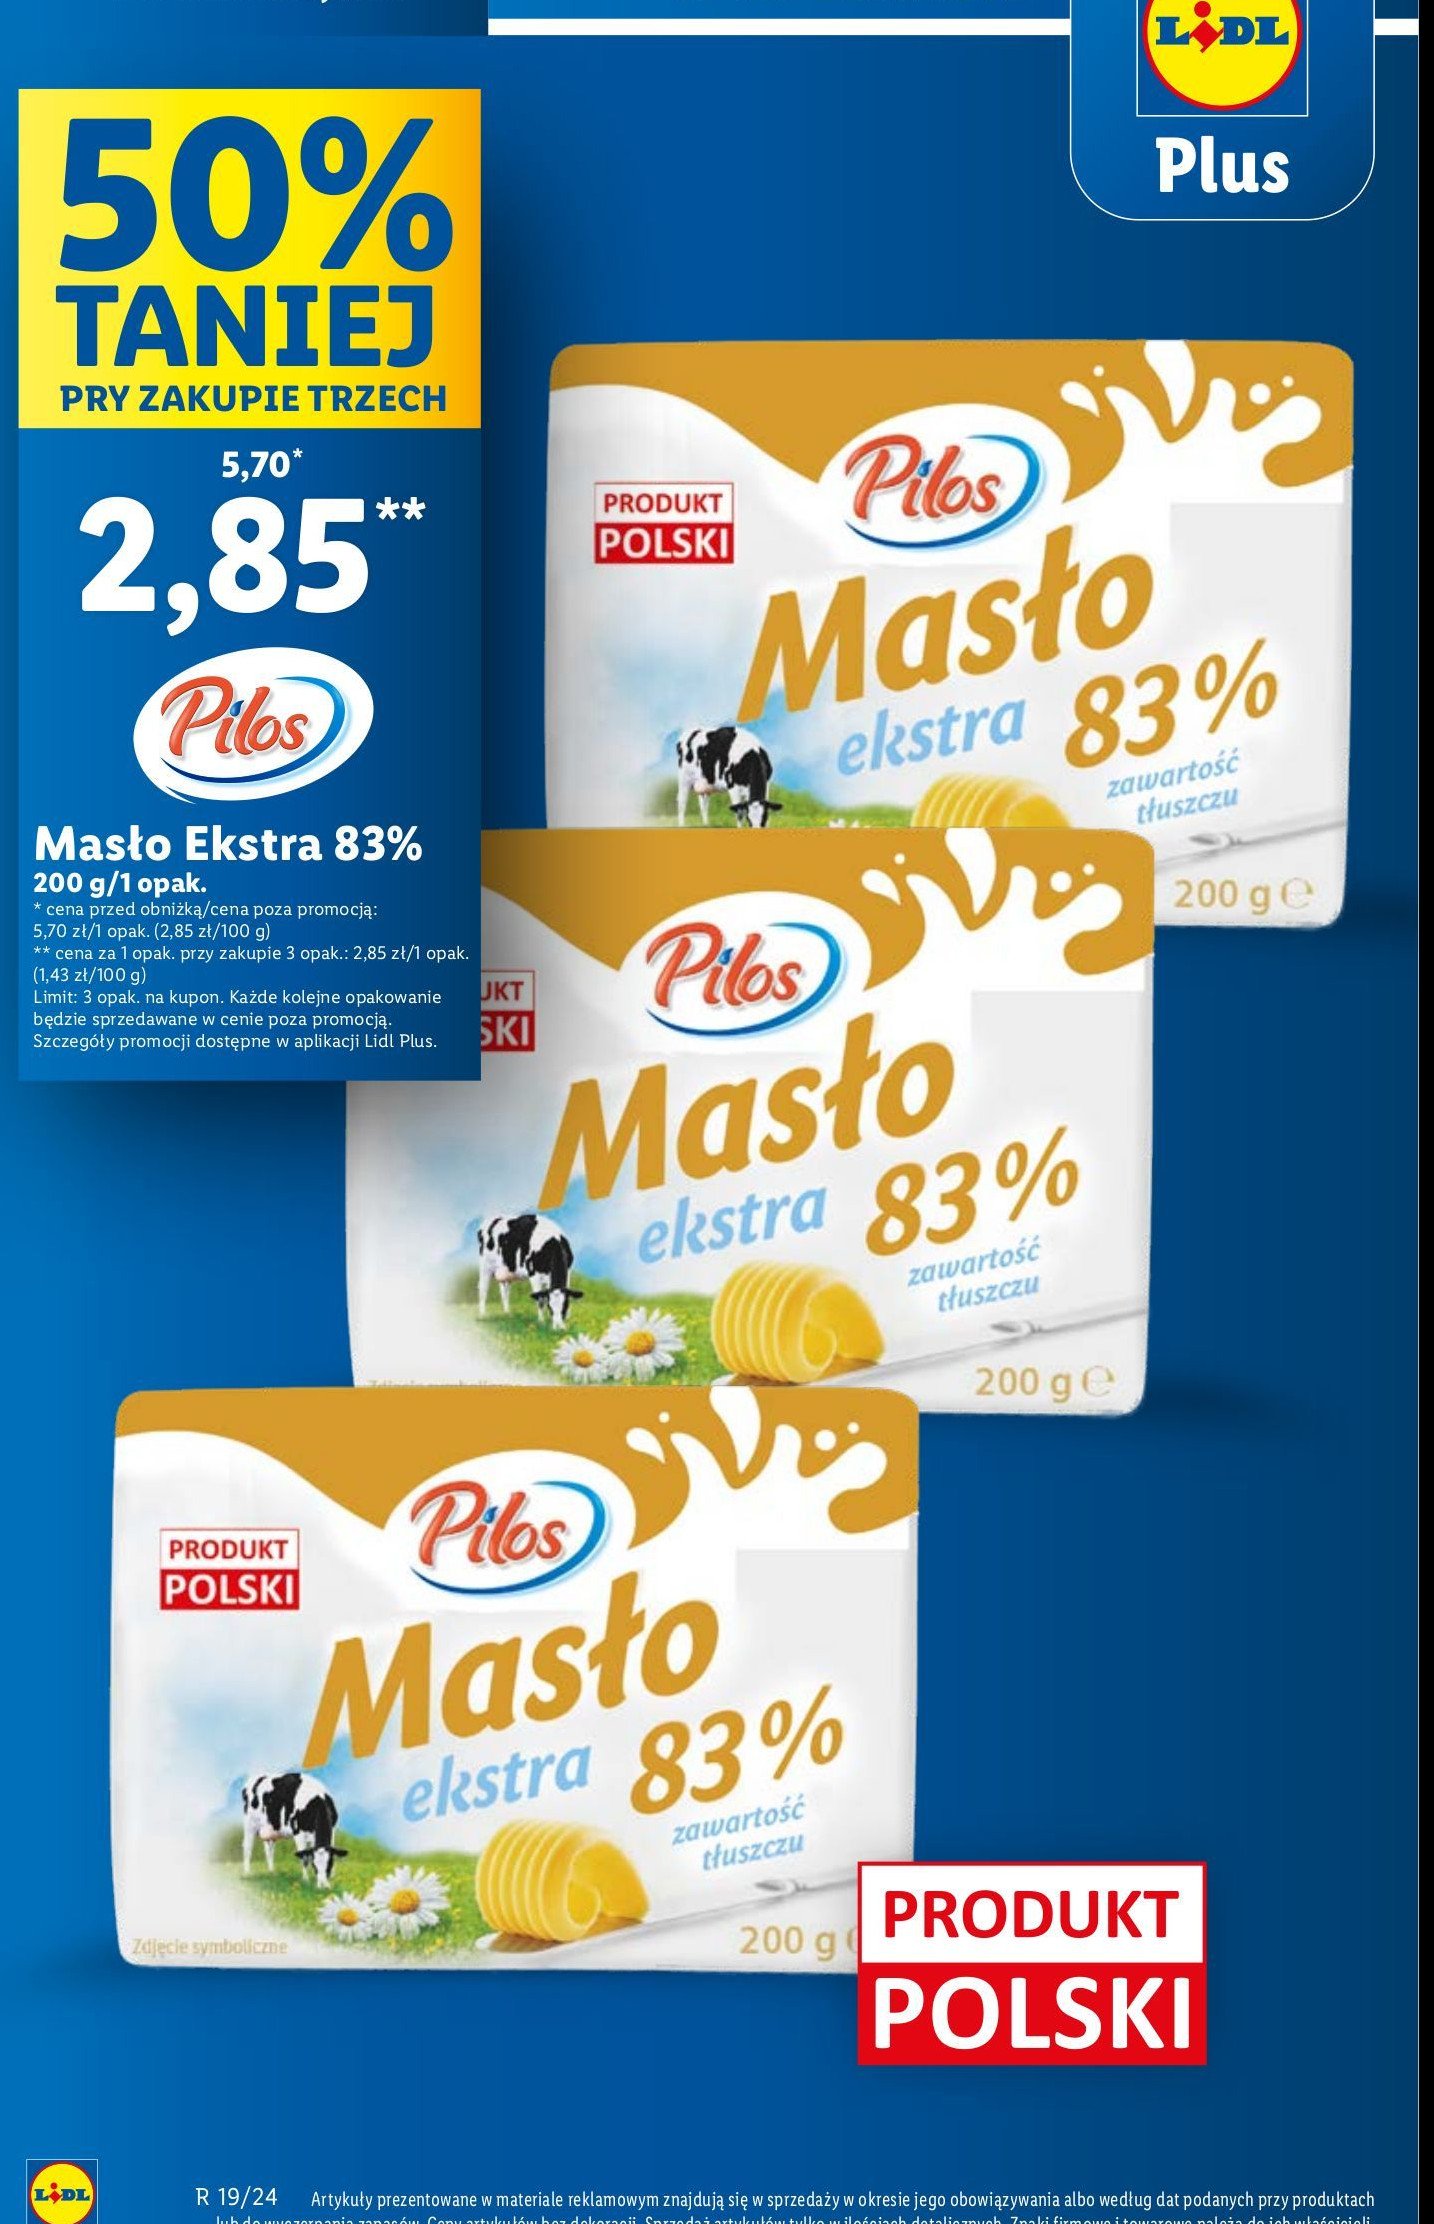 Masło ekstra 83 % Pilos promocja